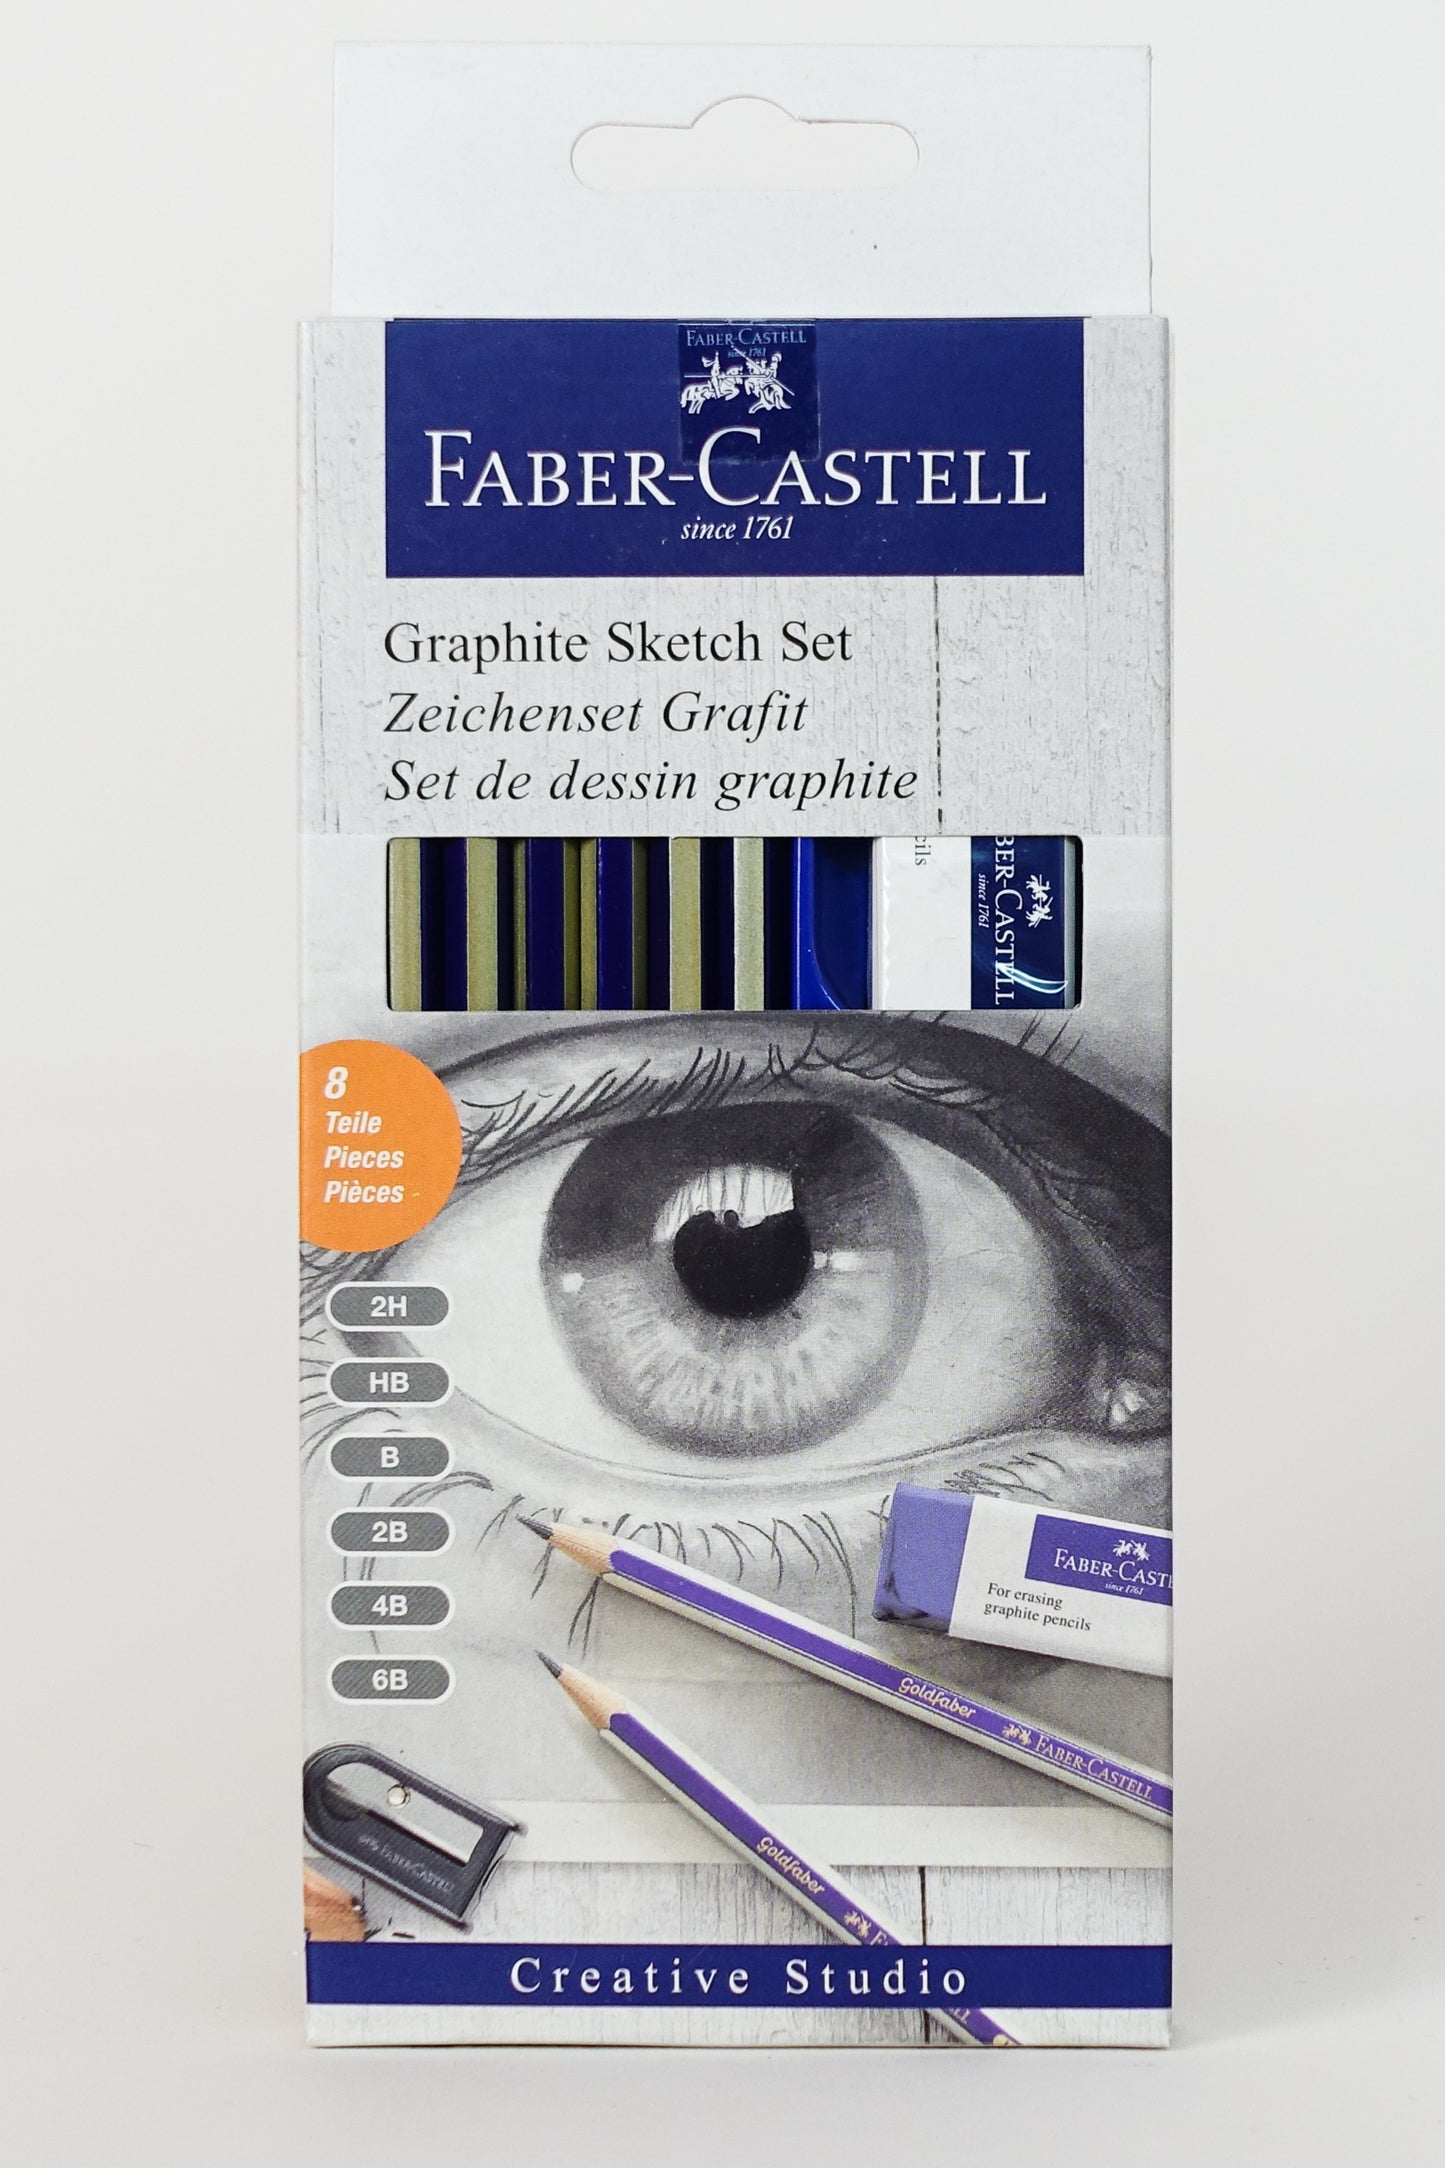 Graphite Sketch set (8 Pieces) - Faber-Castell